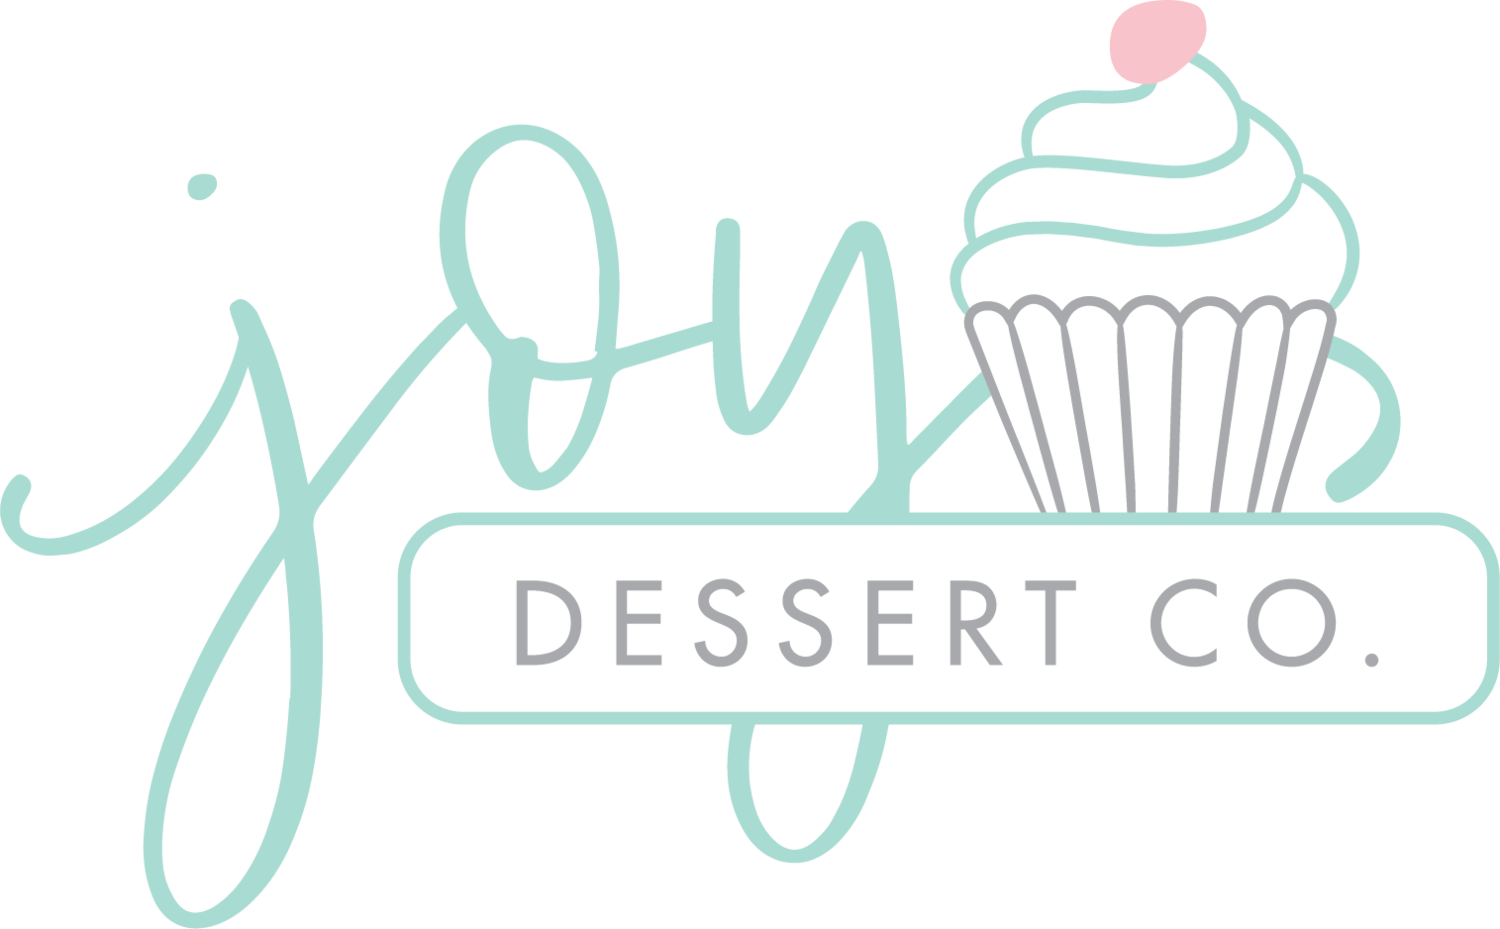 Joy Dessert Co.